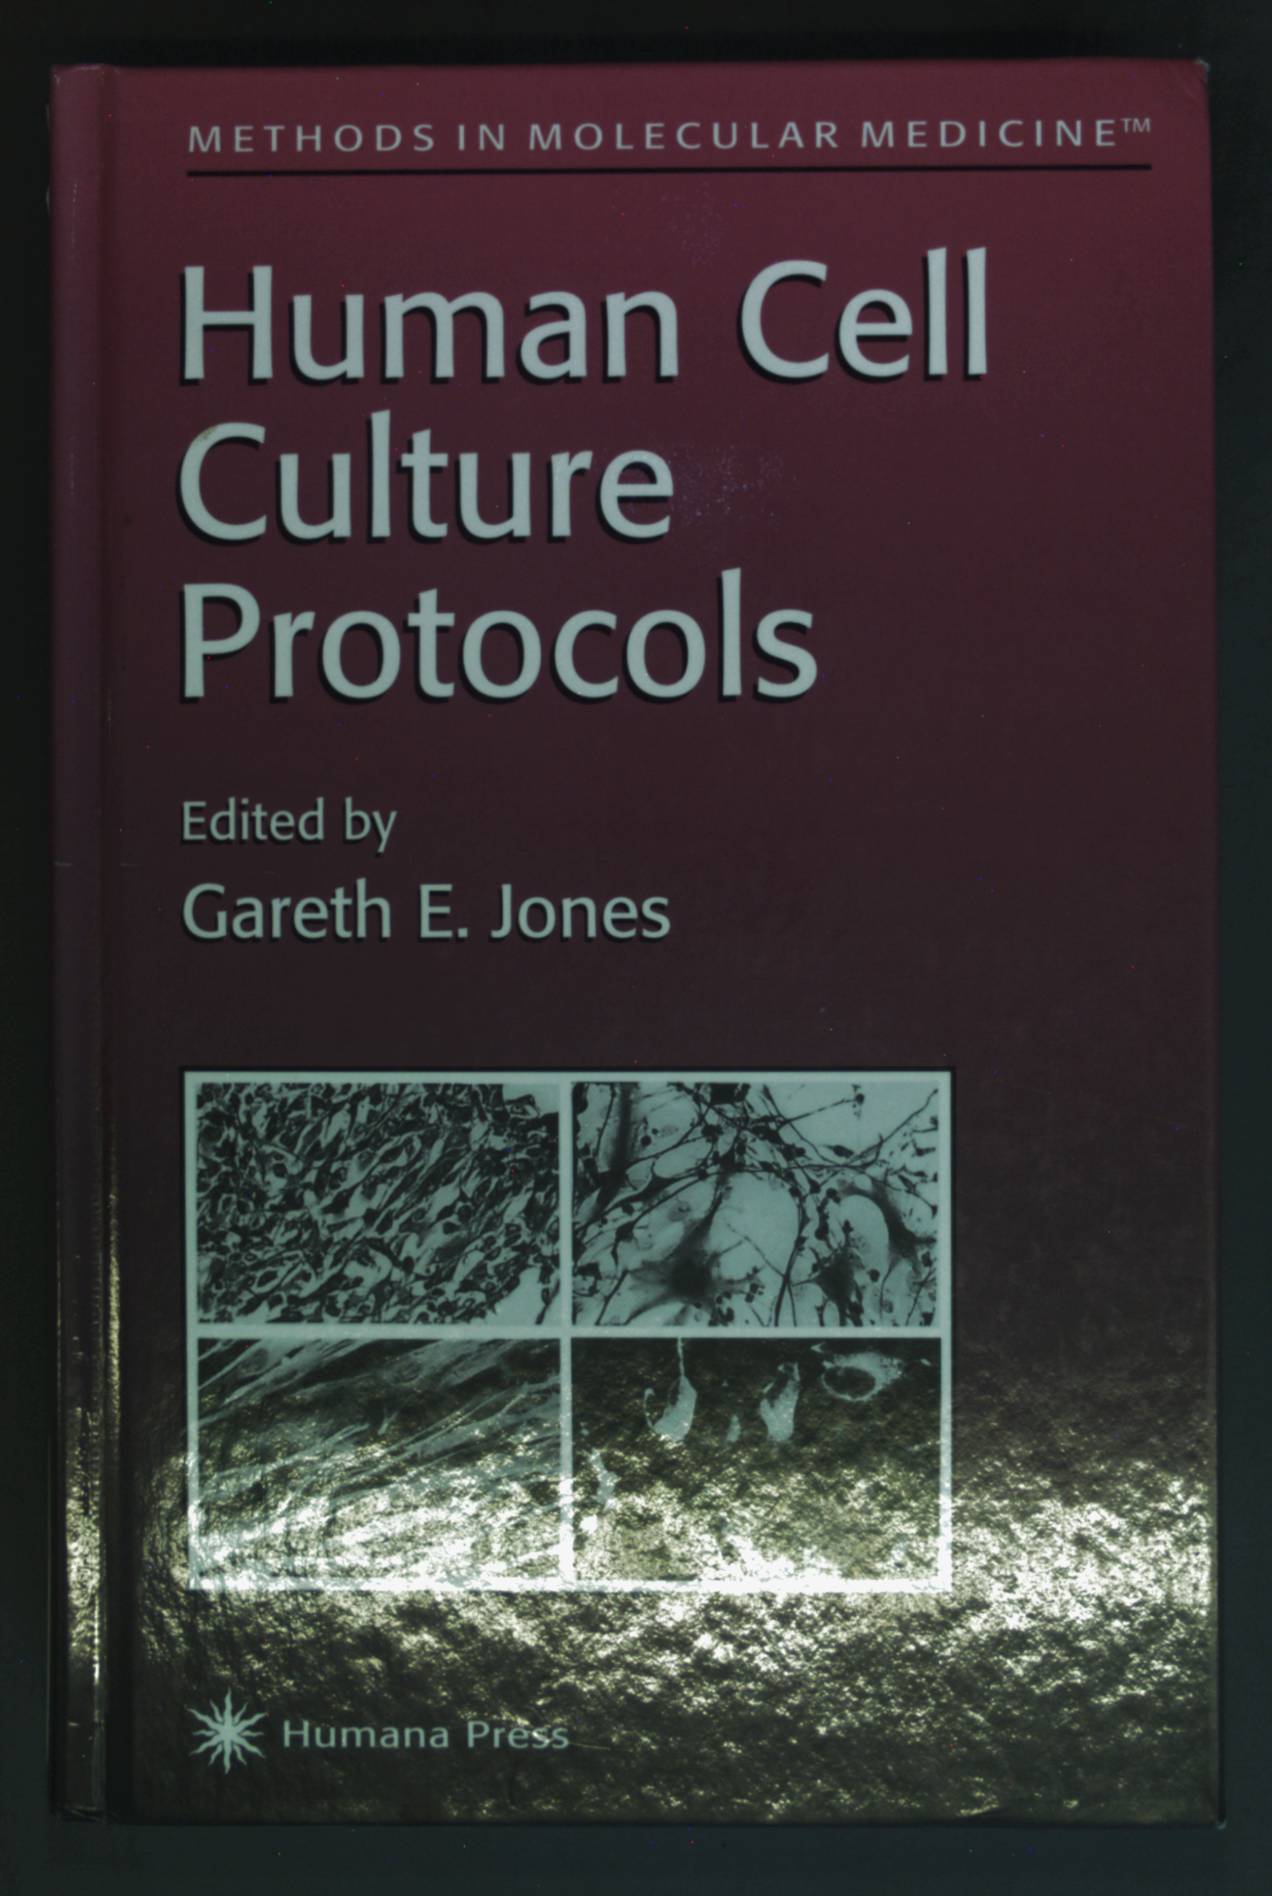 Human Cell Culture Protocols. Methods in Molecular Medicine. - Jones, Gareth E.